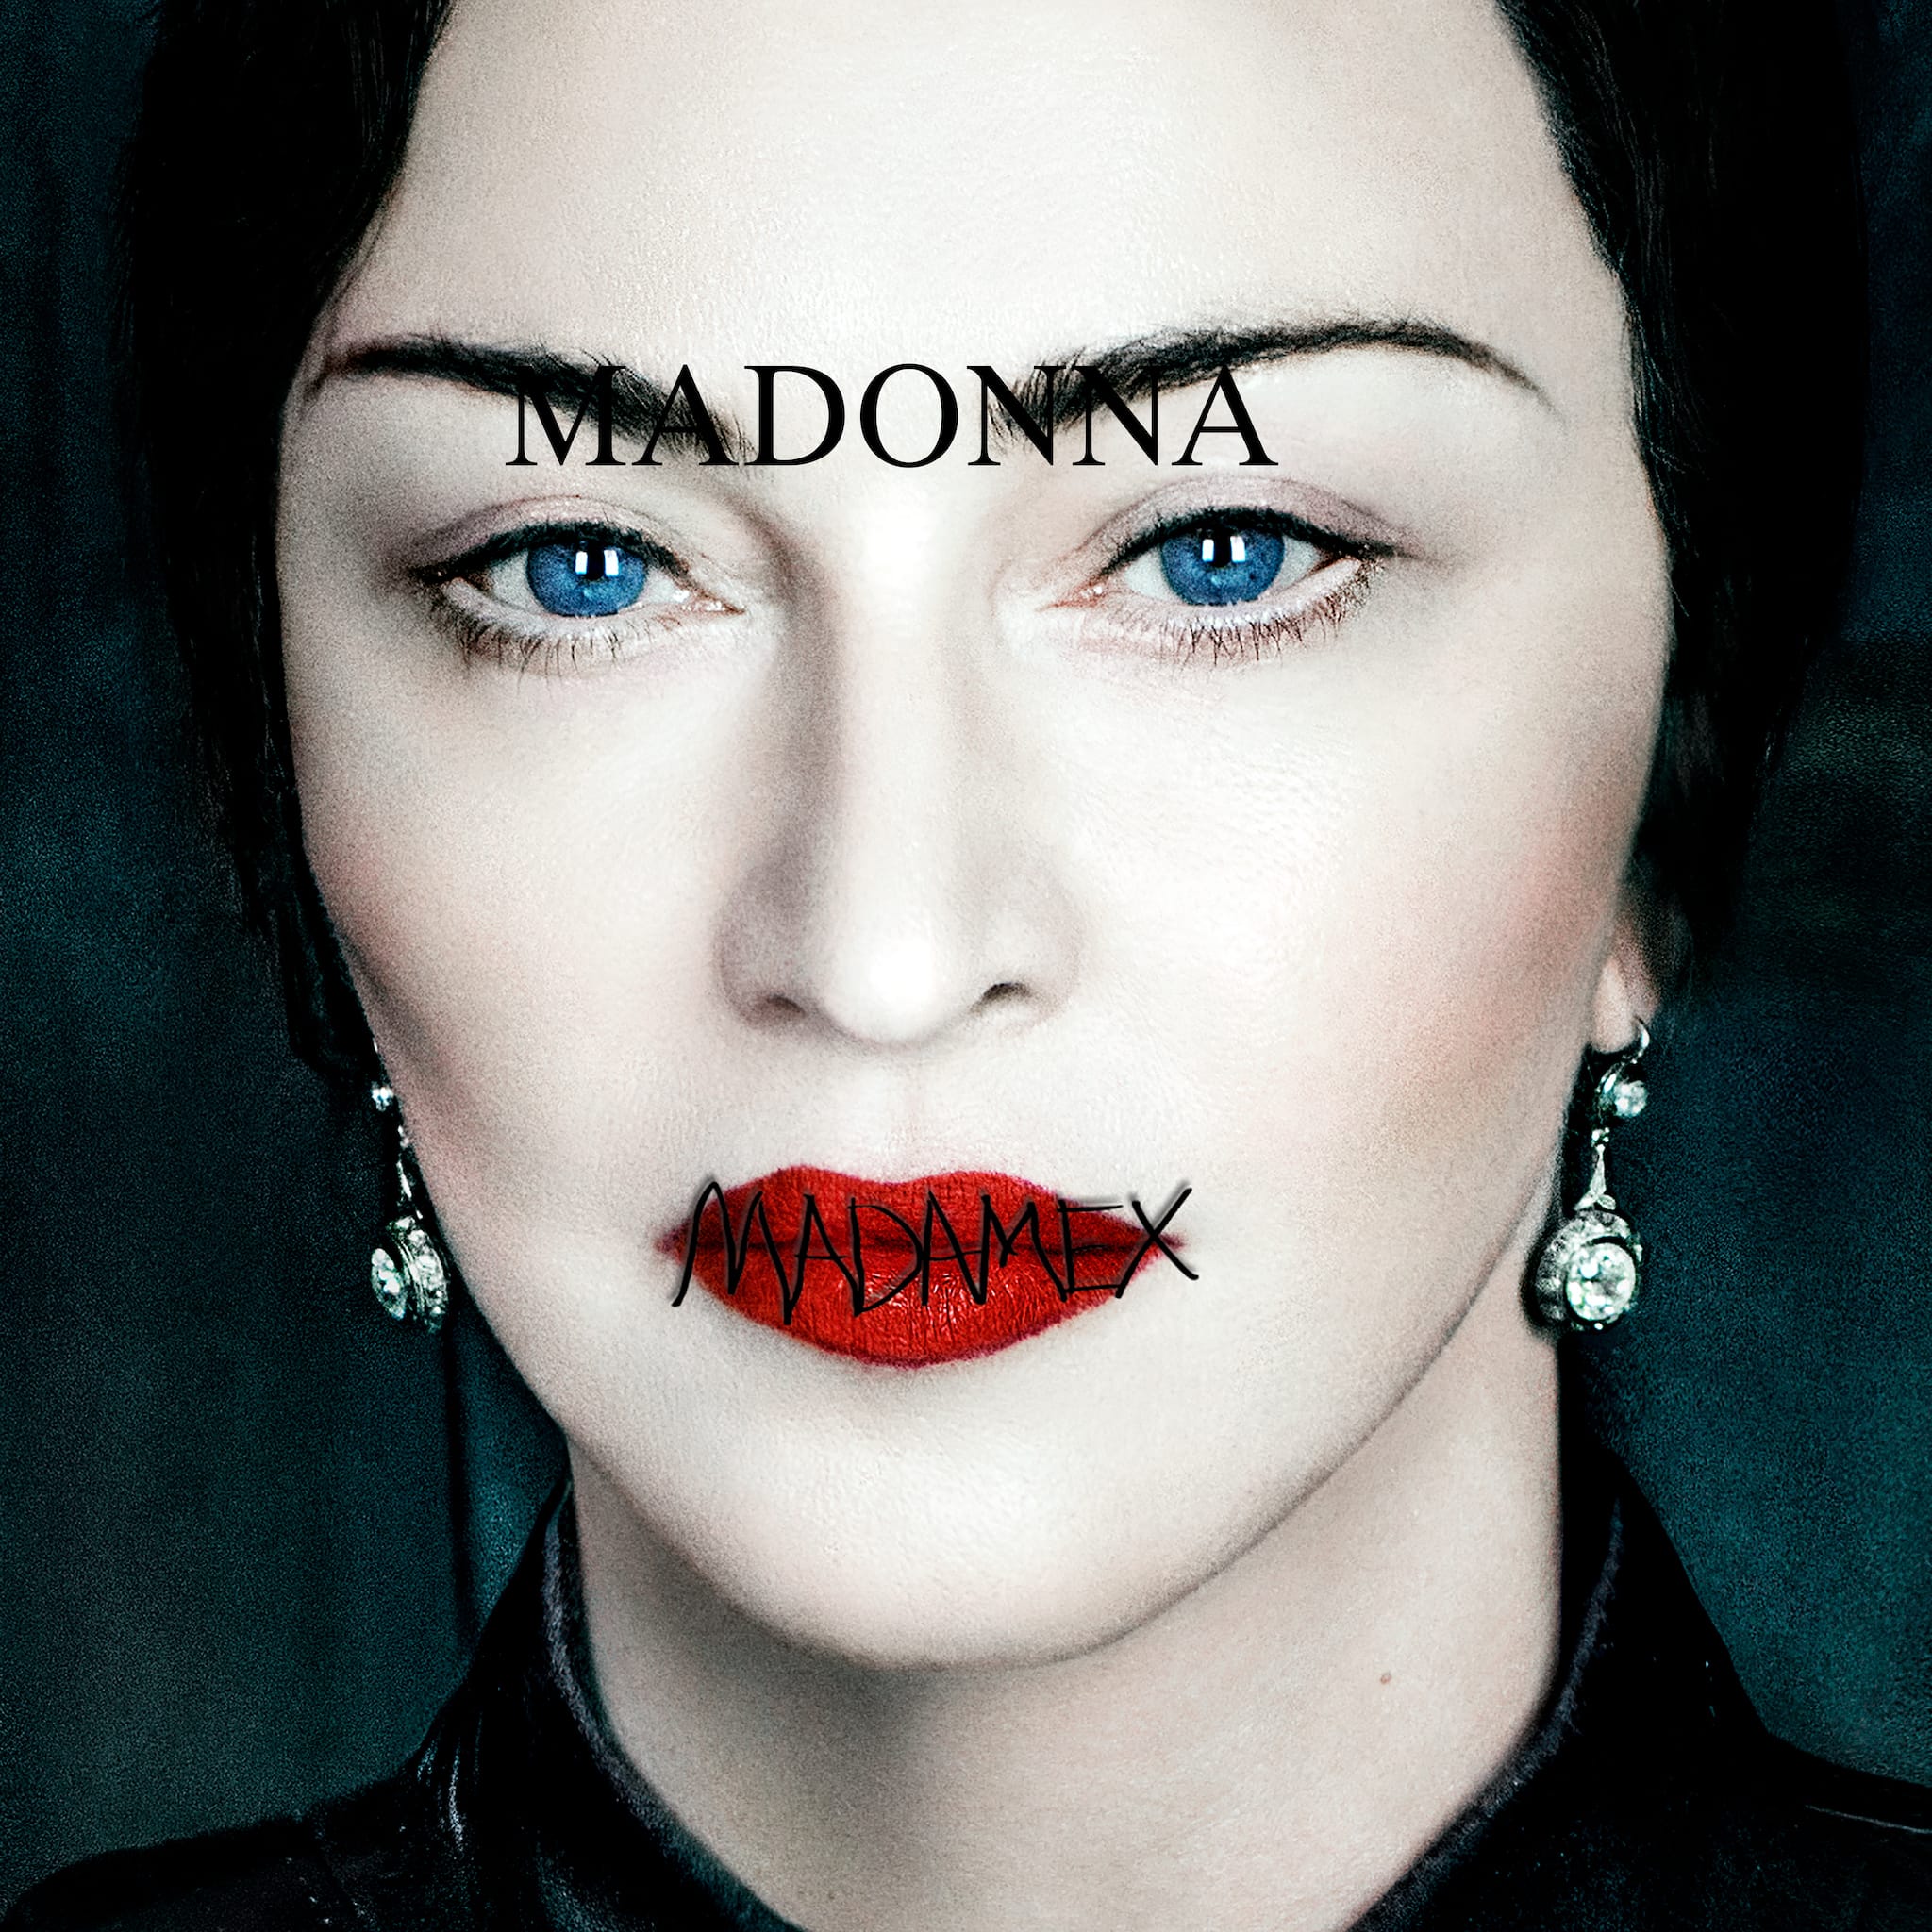 MADONNA image pochette album MADAME X STANDARD COVER musique